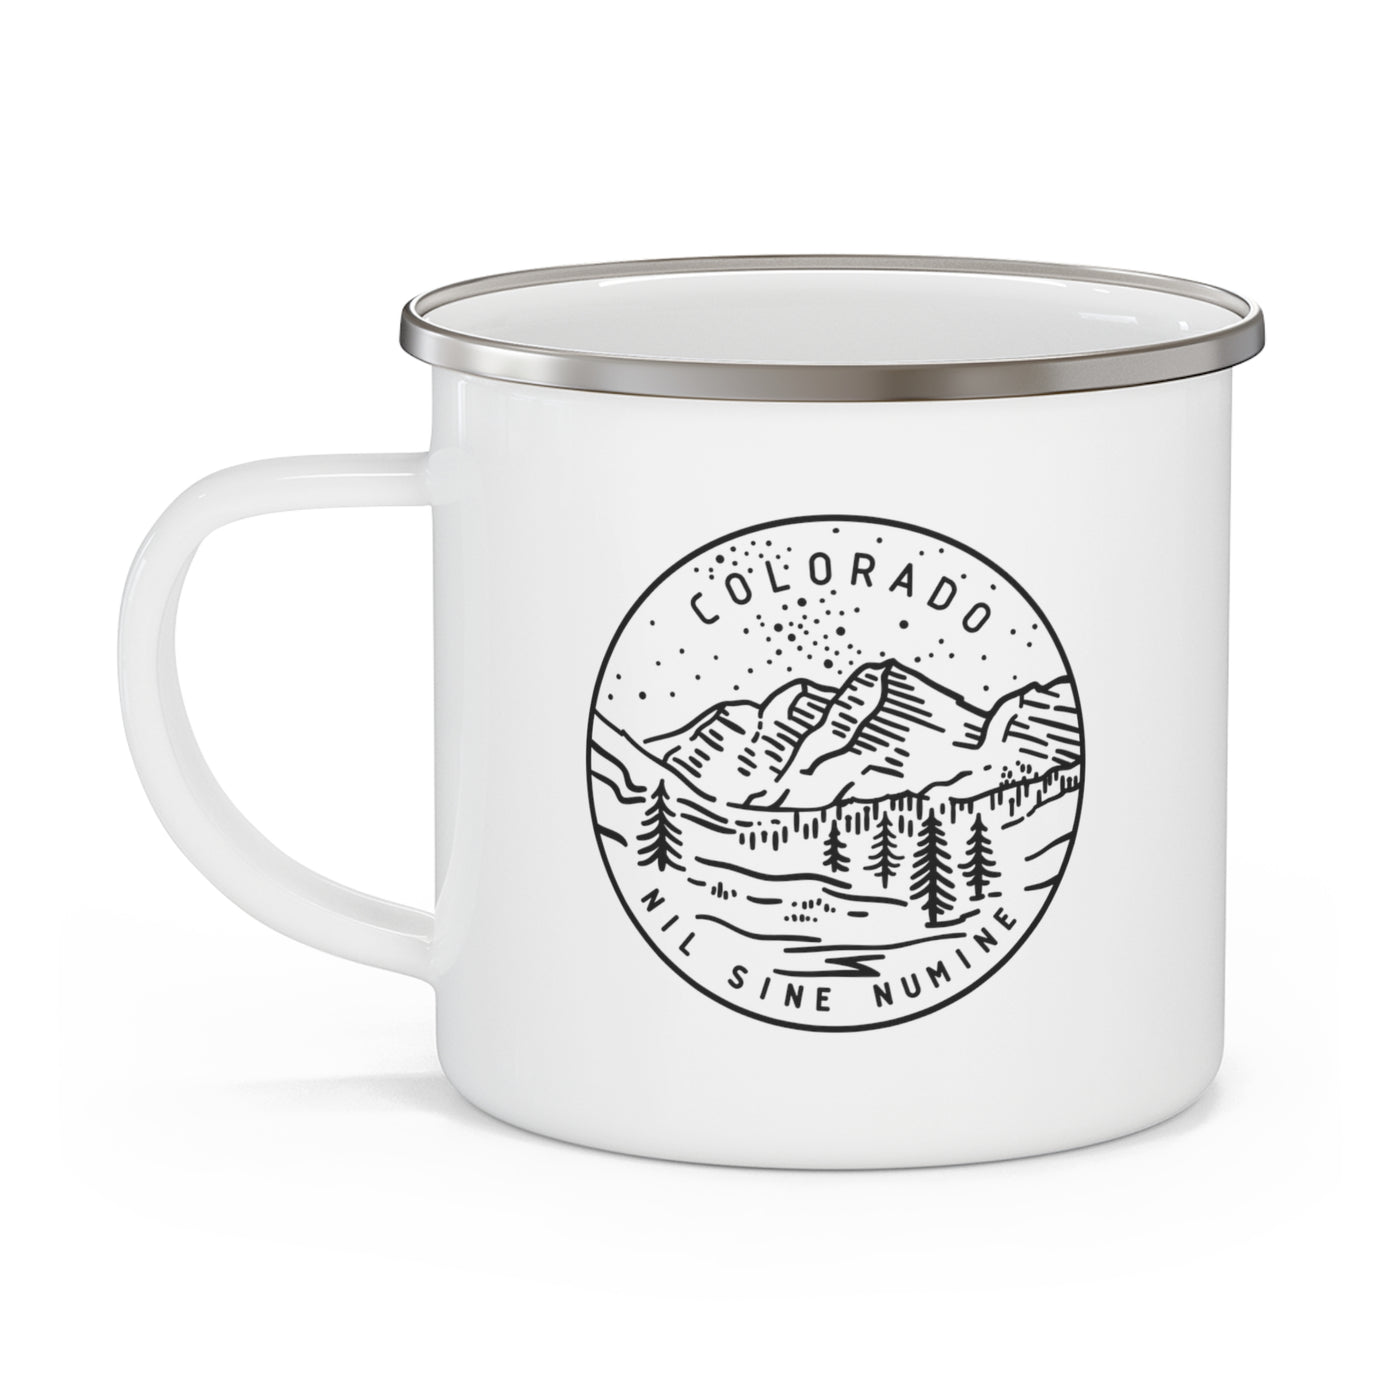 Colorado State Motto Enamel Camping Mug